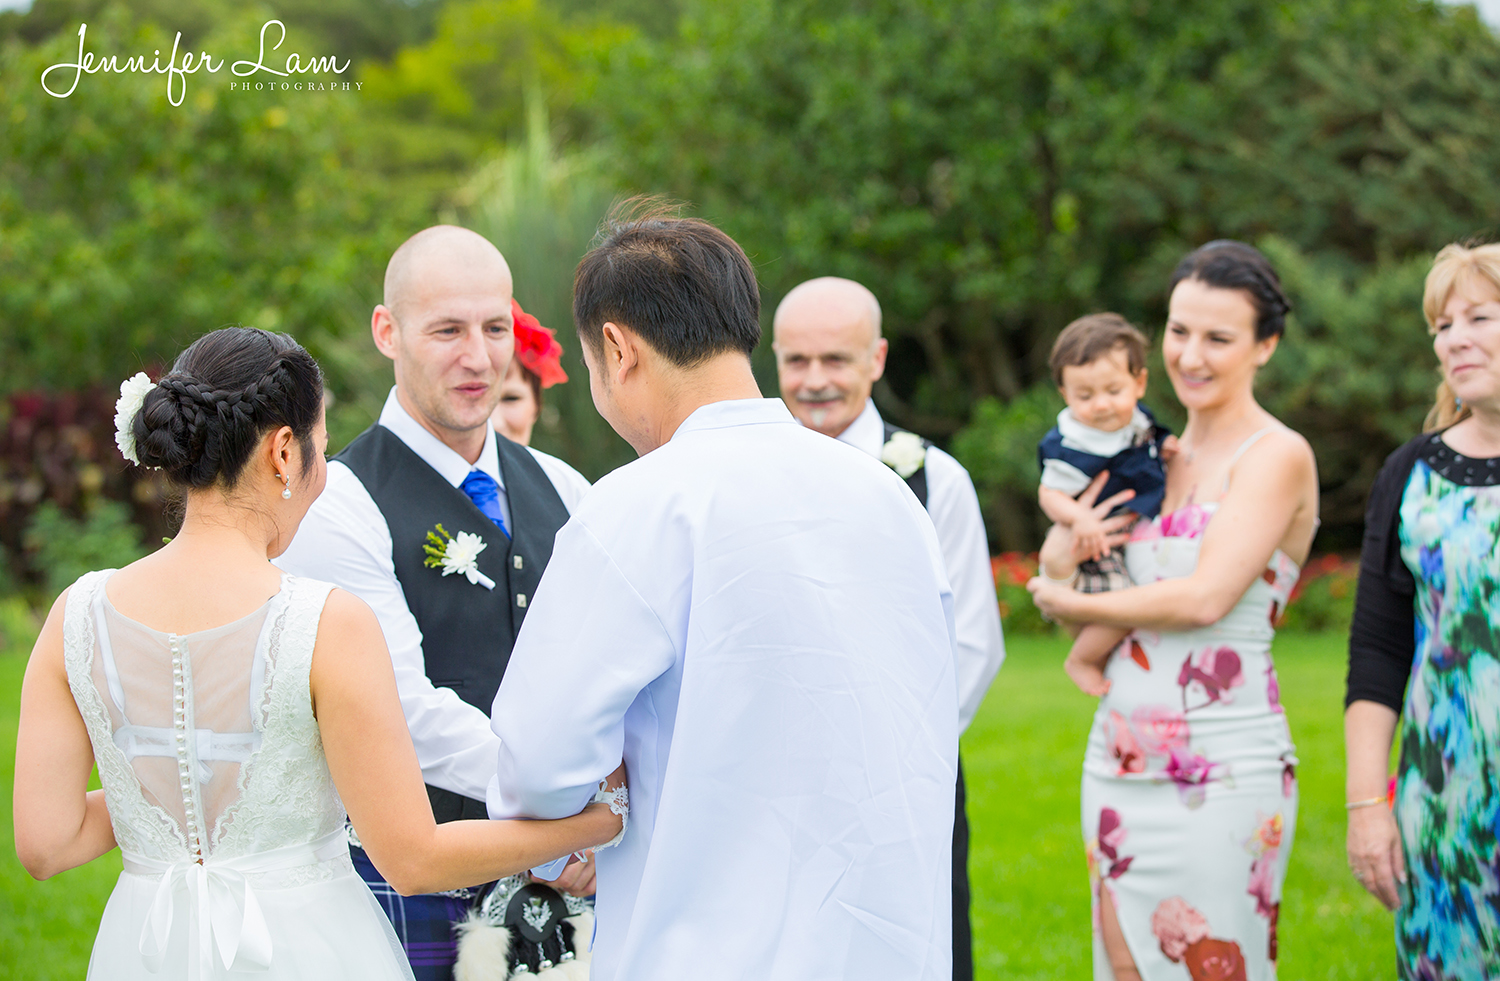 Sydney Wedding Photographer - Jennifer Lam Photography (32).jpg